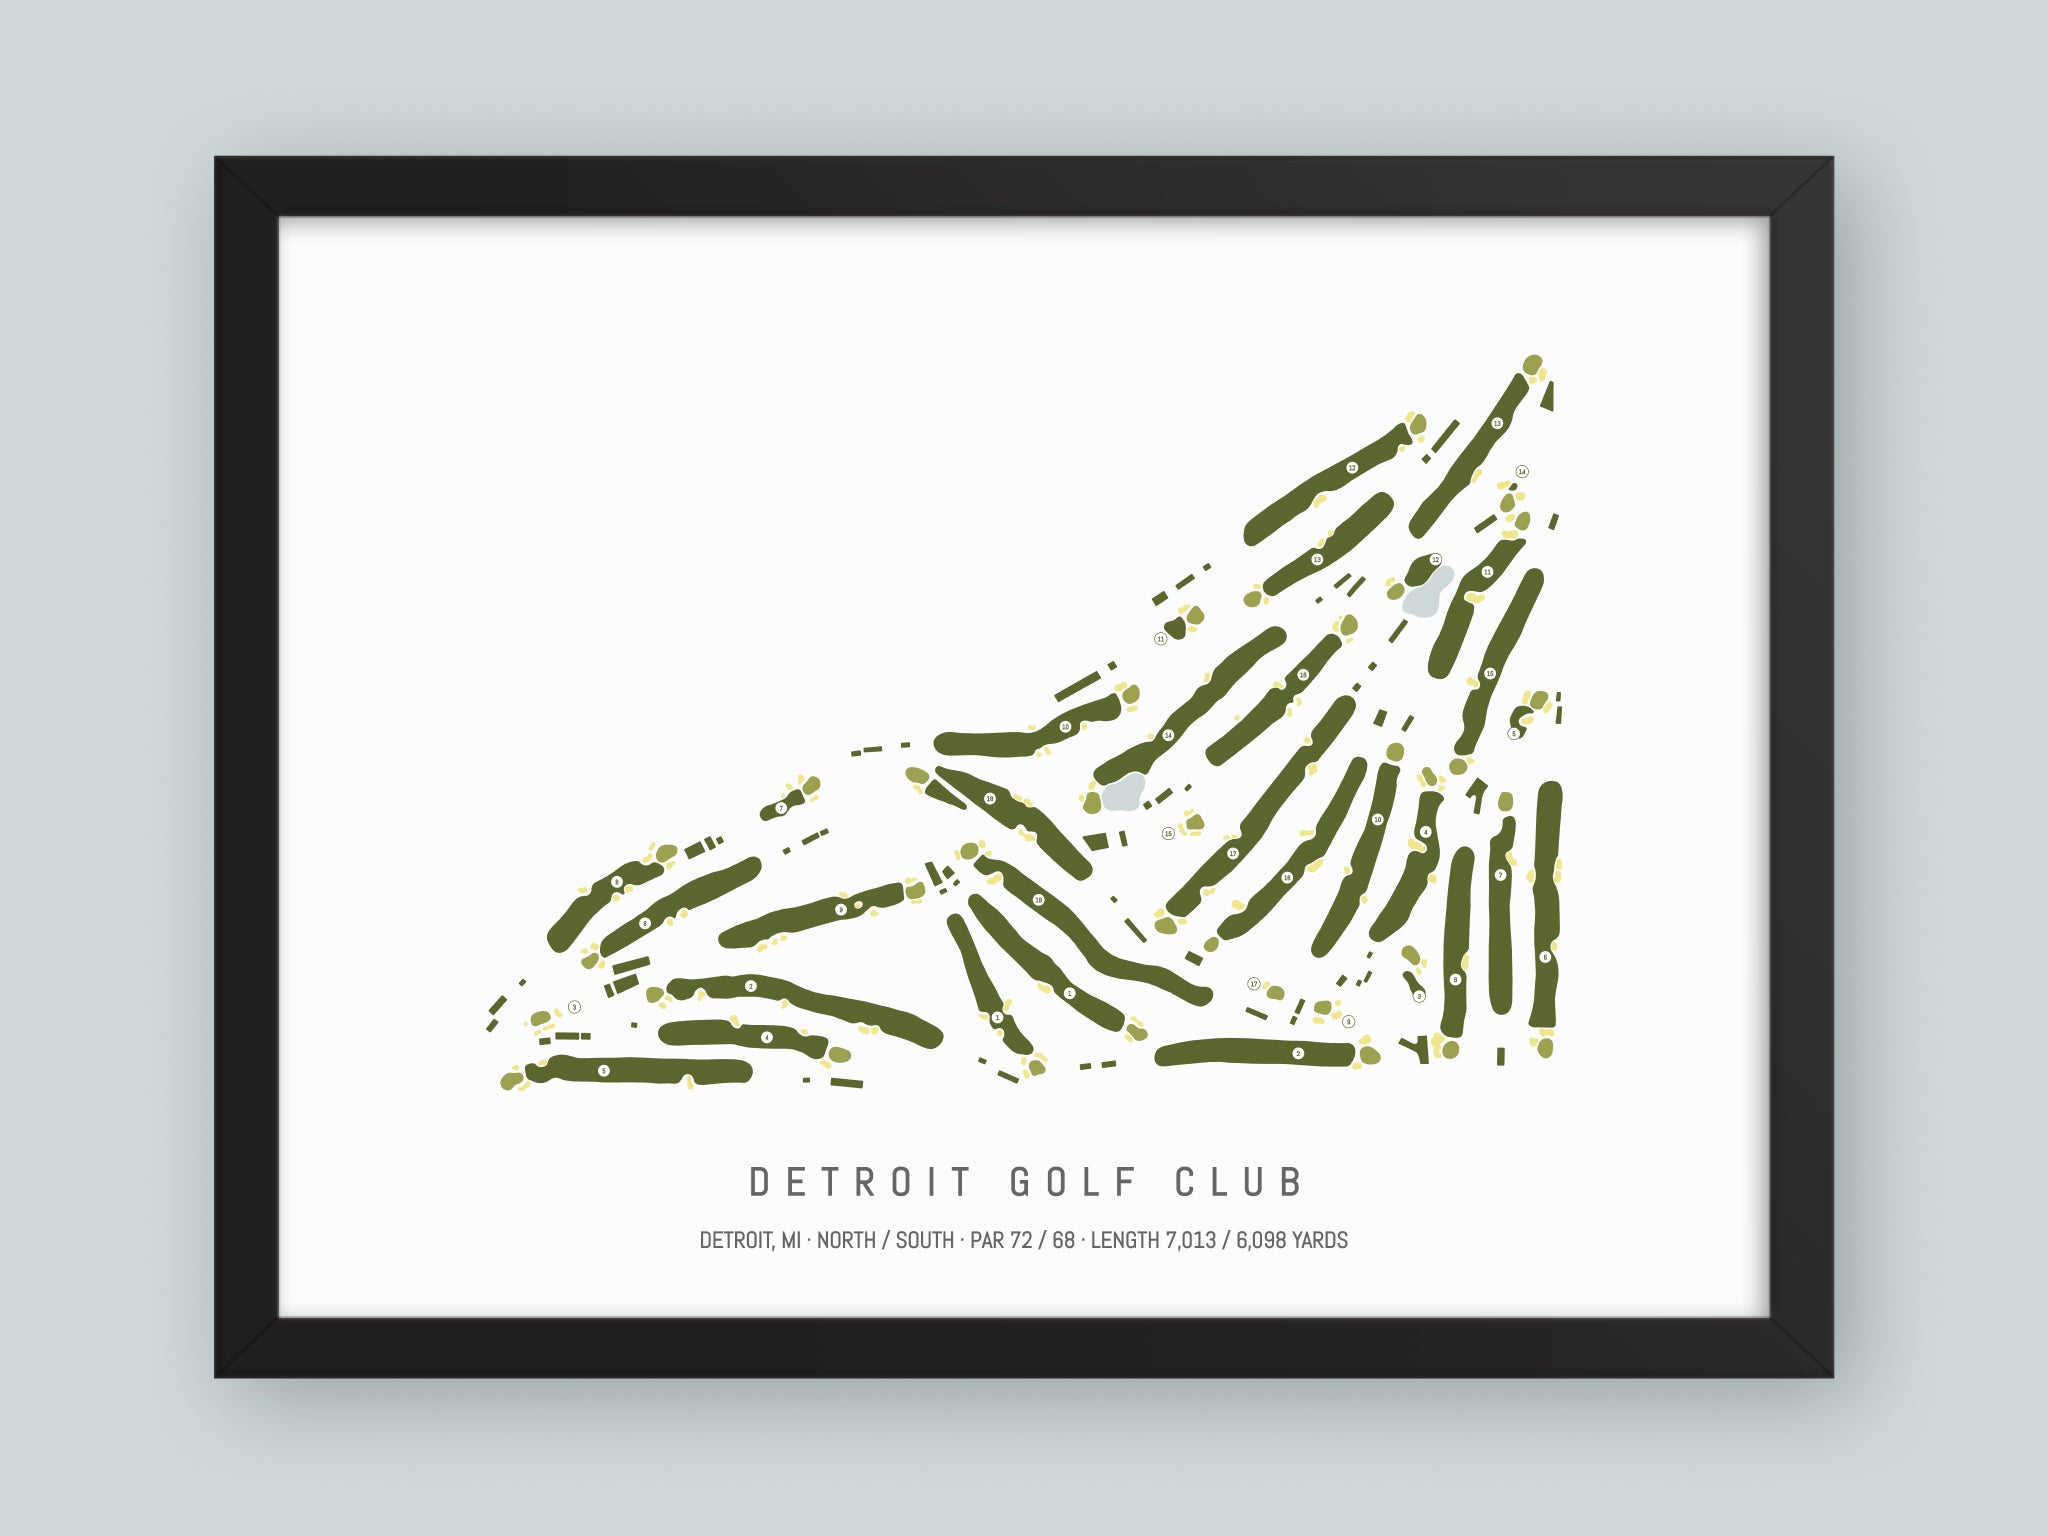 Detroit-Golf-Club-MI--Black-Frame-24x18-With-Hole-Numbers